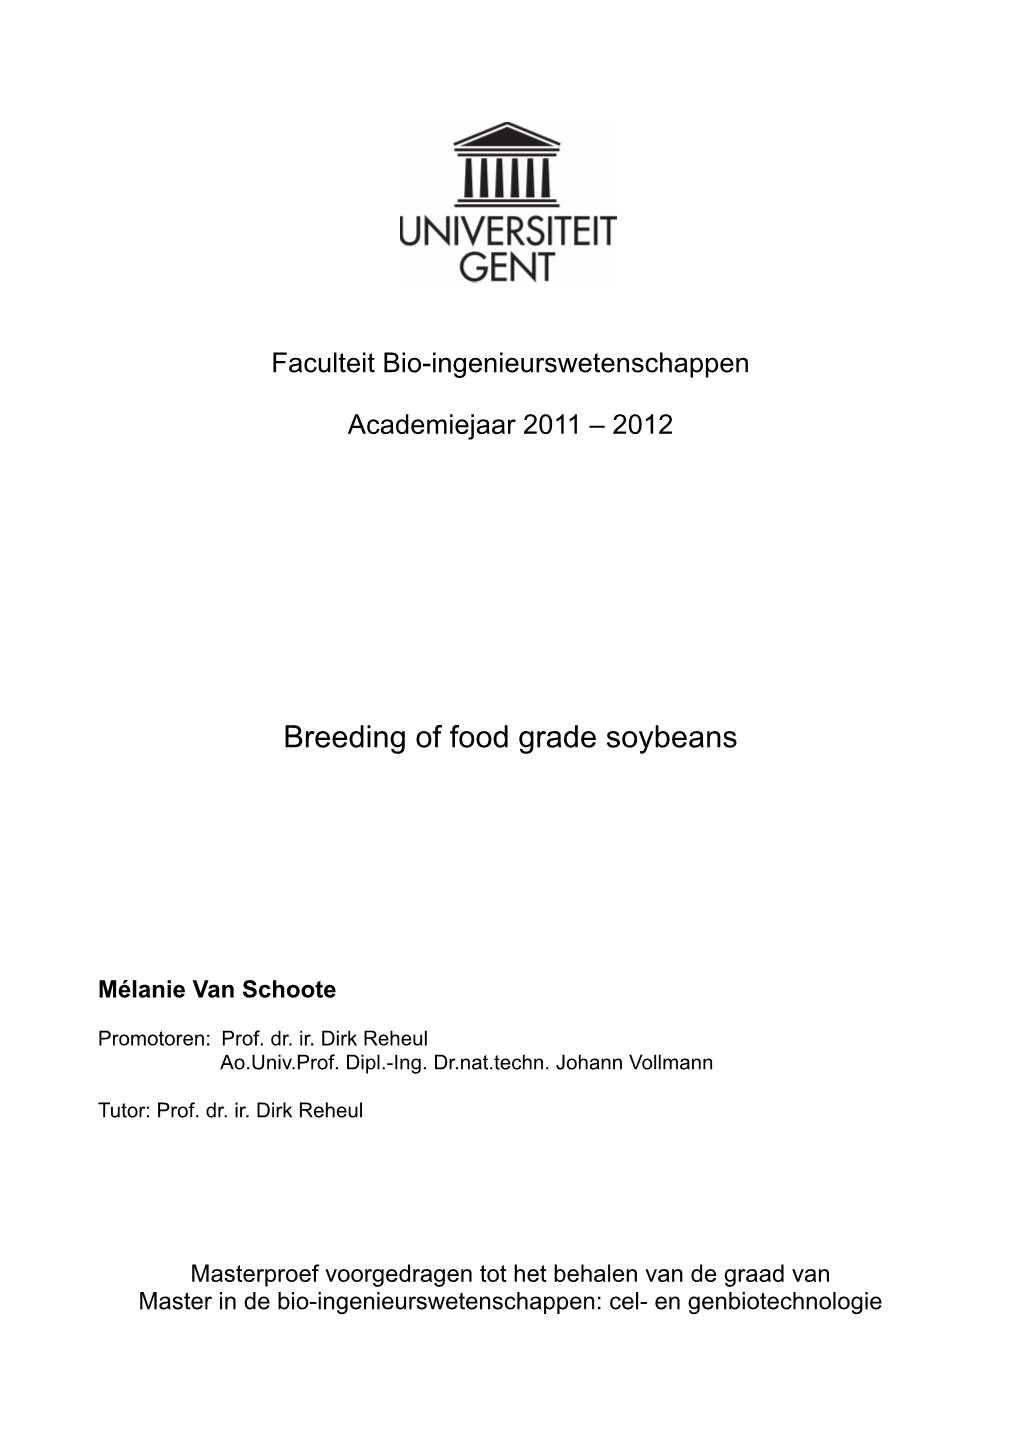 Breeding of Food Grade Soybeans